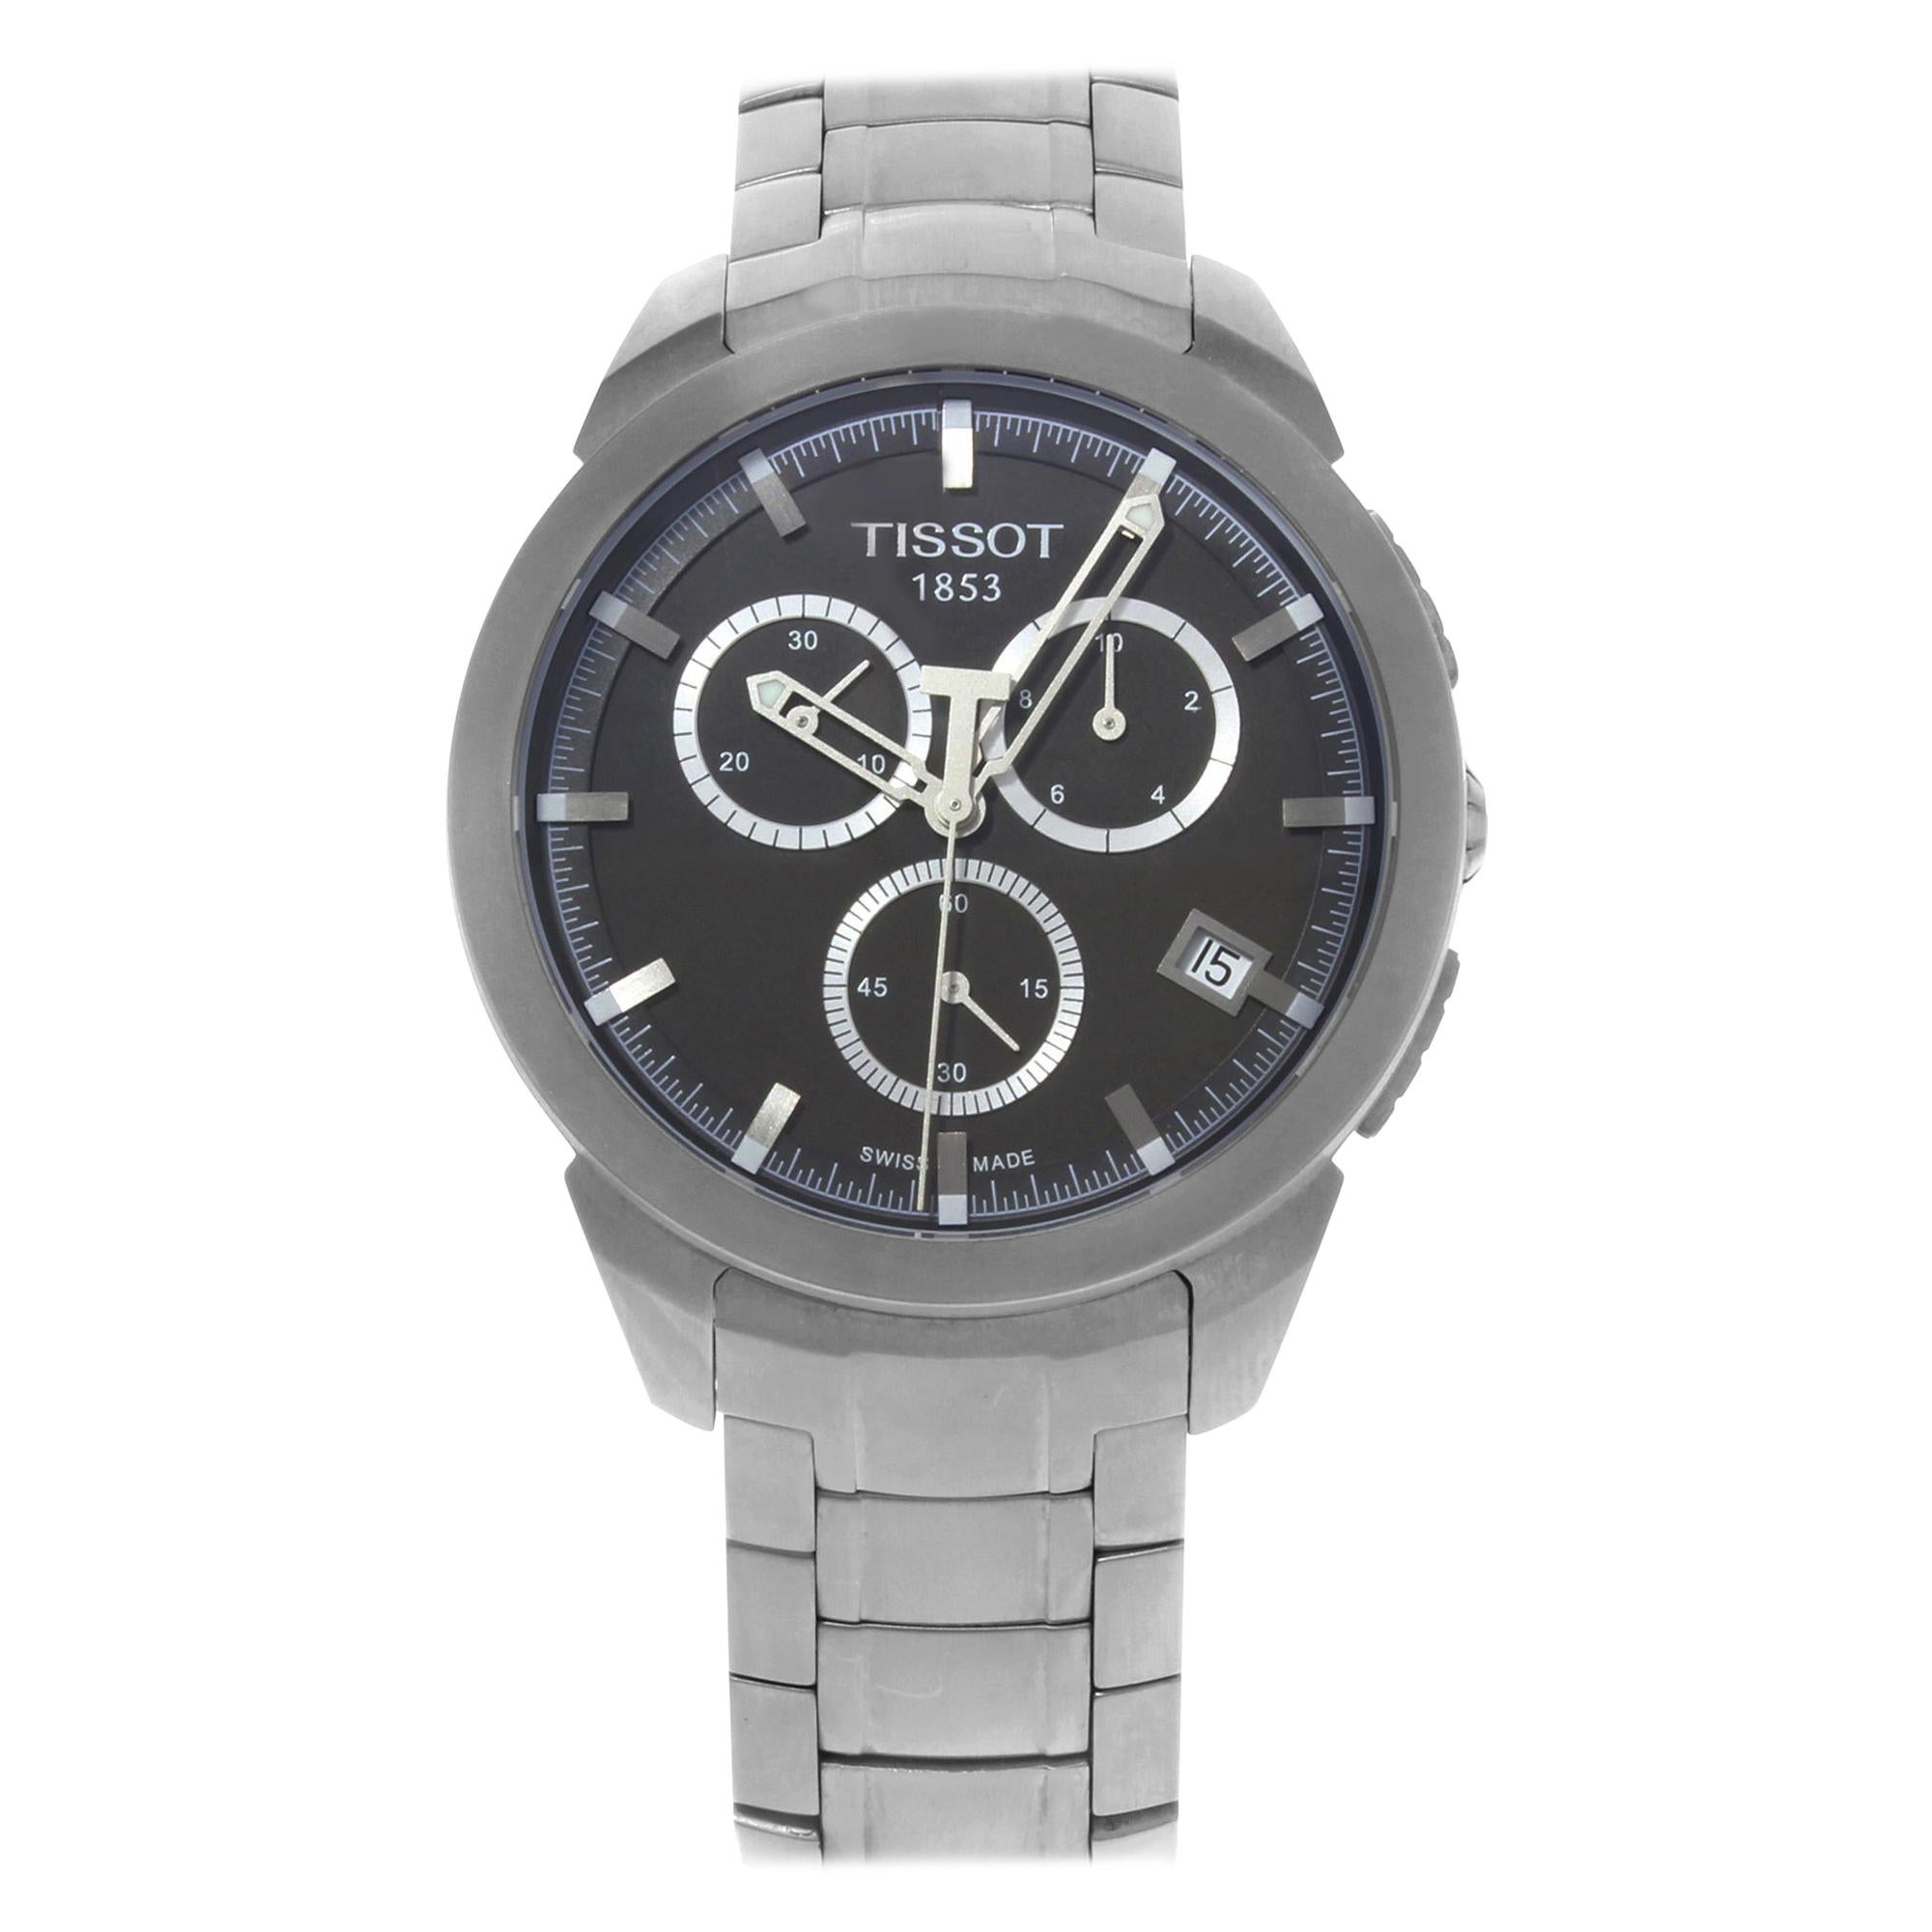 TISSOT T-Sport Titanium Chronograph Quartz Men's Watch T069.417.44.061.00